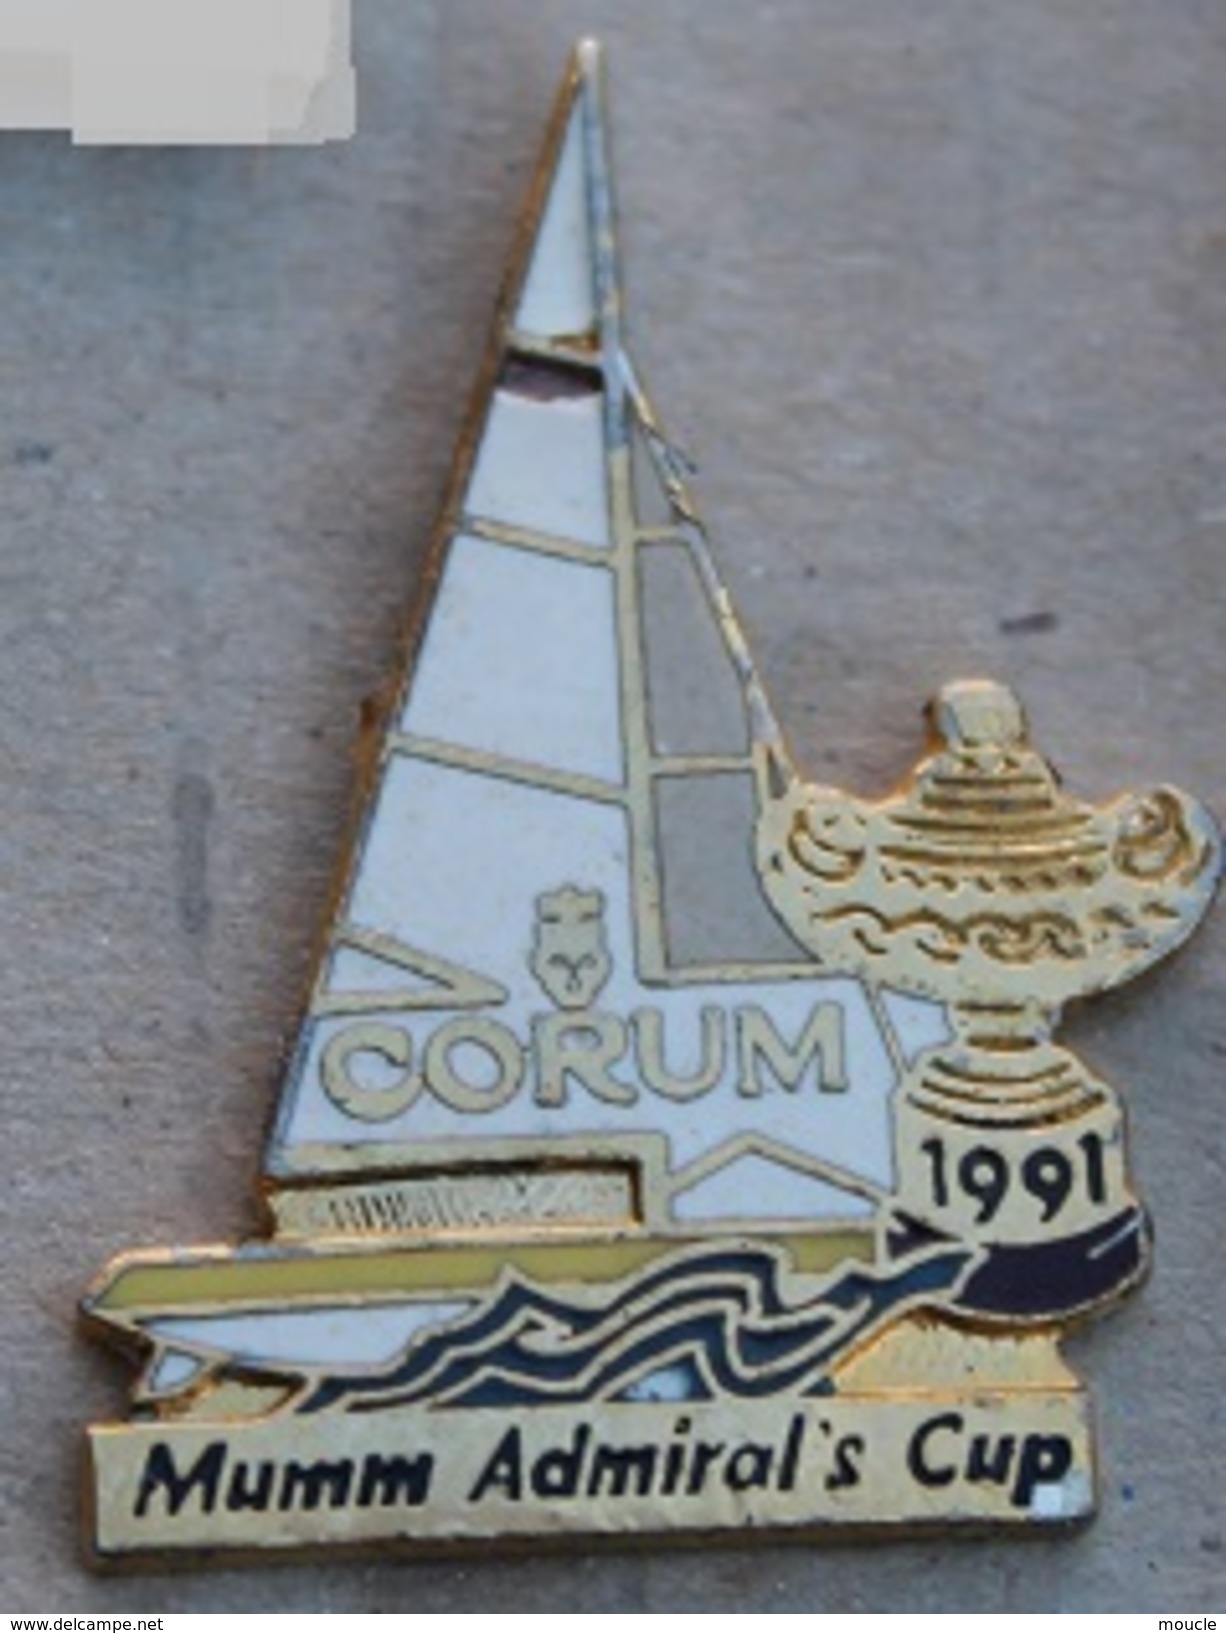 BATEAU - VOILIER - CORUM - MUMM ADMIRAL'S CUP 1991 - MER - NAVIRE -          (15) - Boats